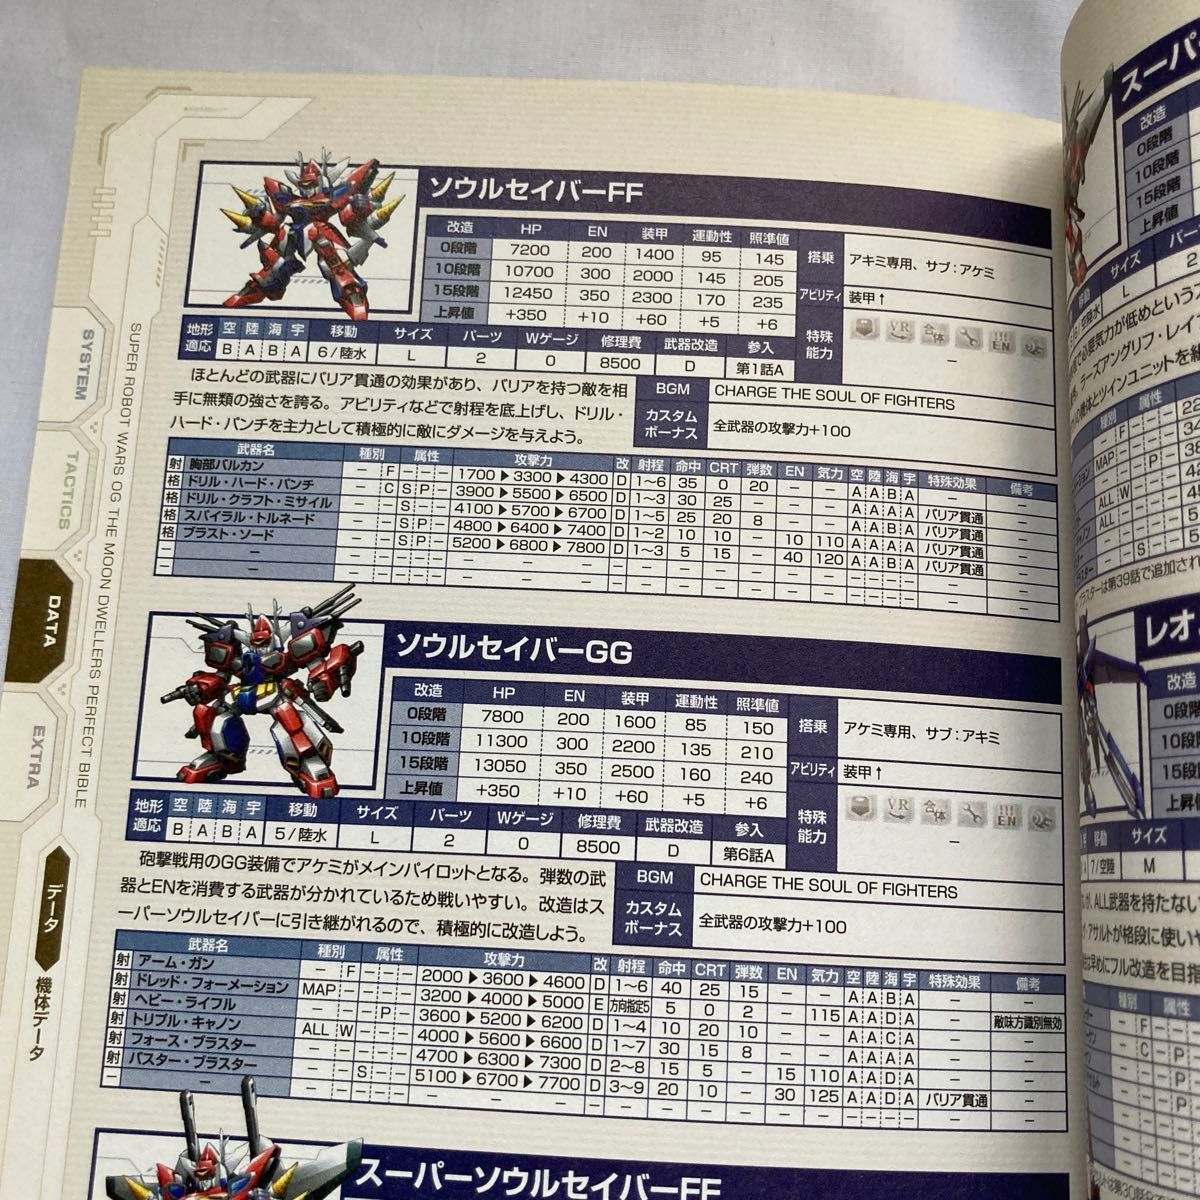 【PS4】スーパーロボット大戦OG ムーン・デュエラーズ 攻略本とセット